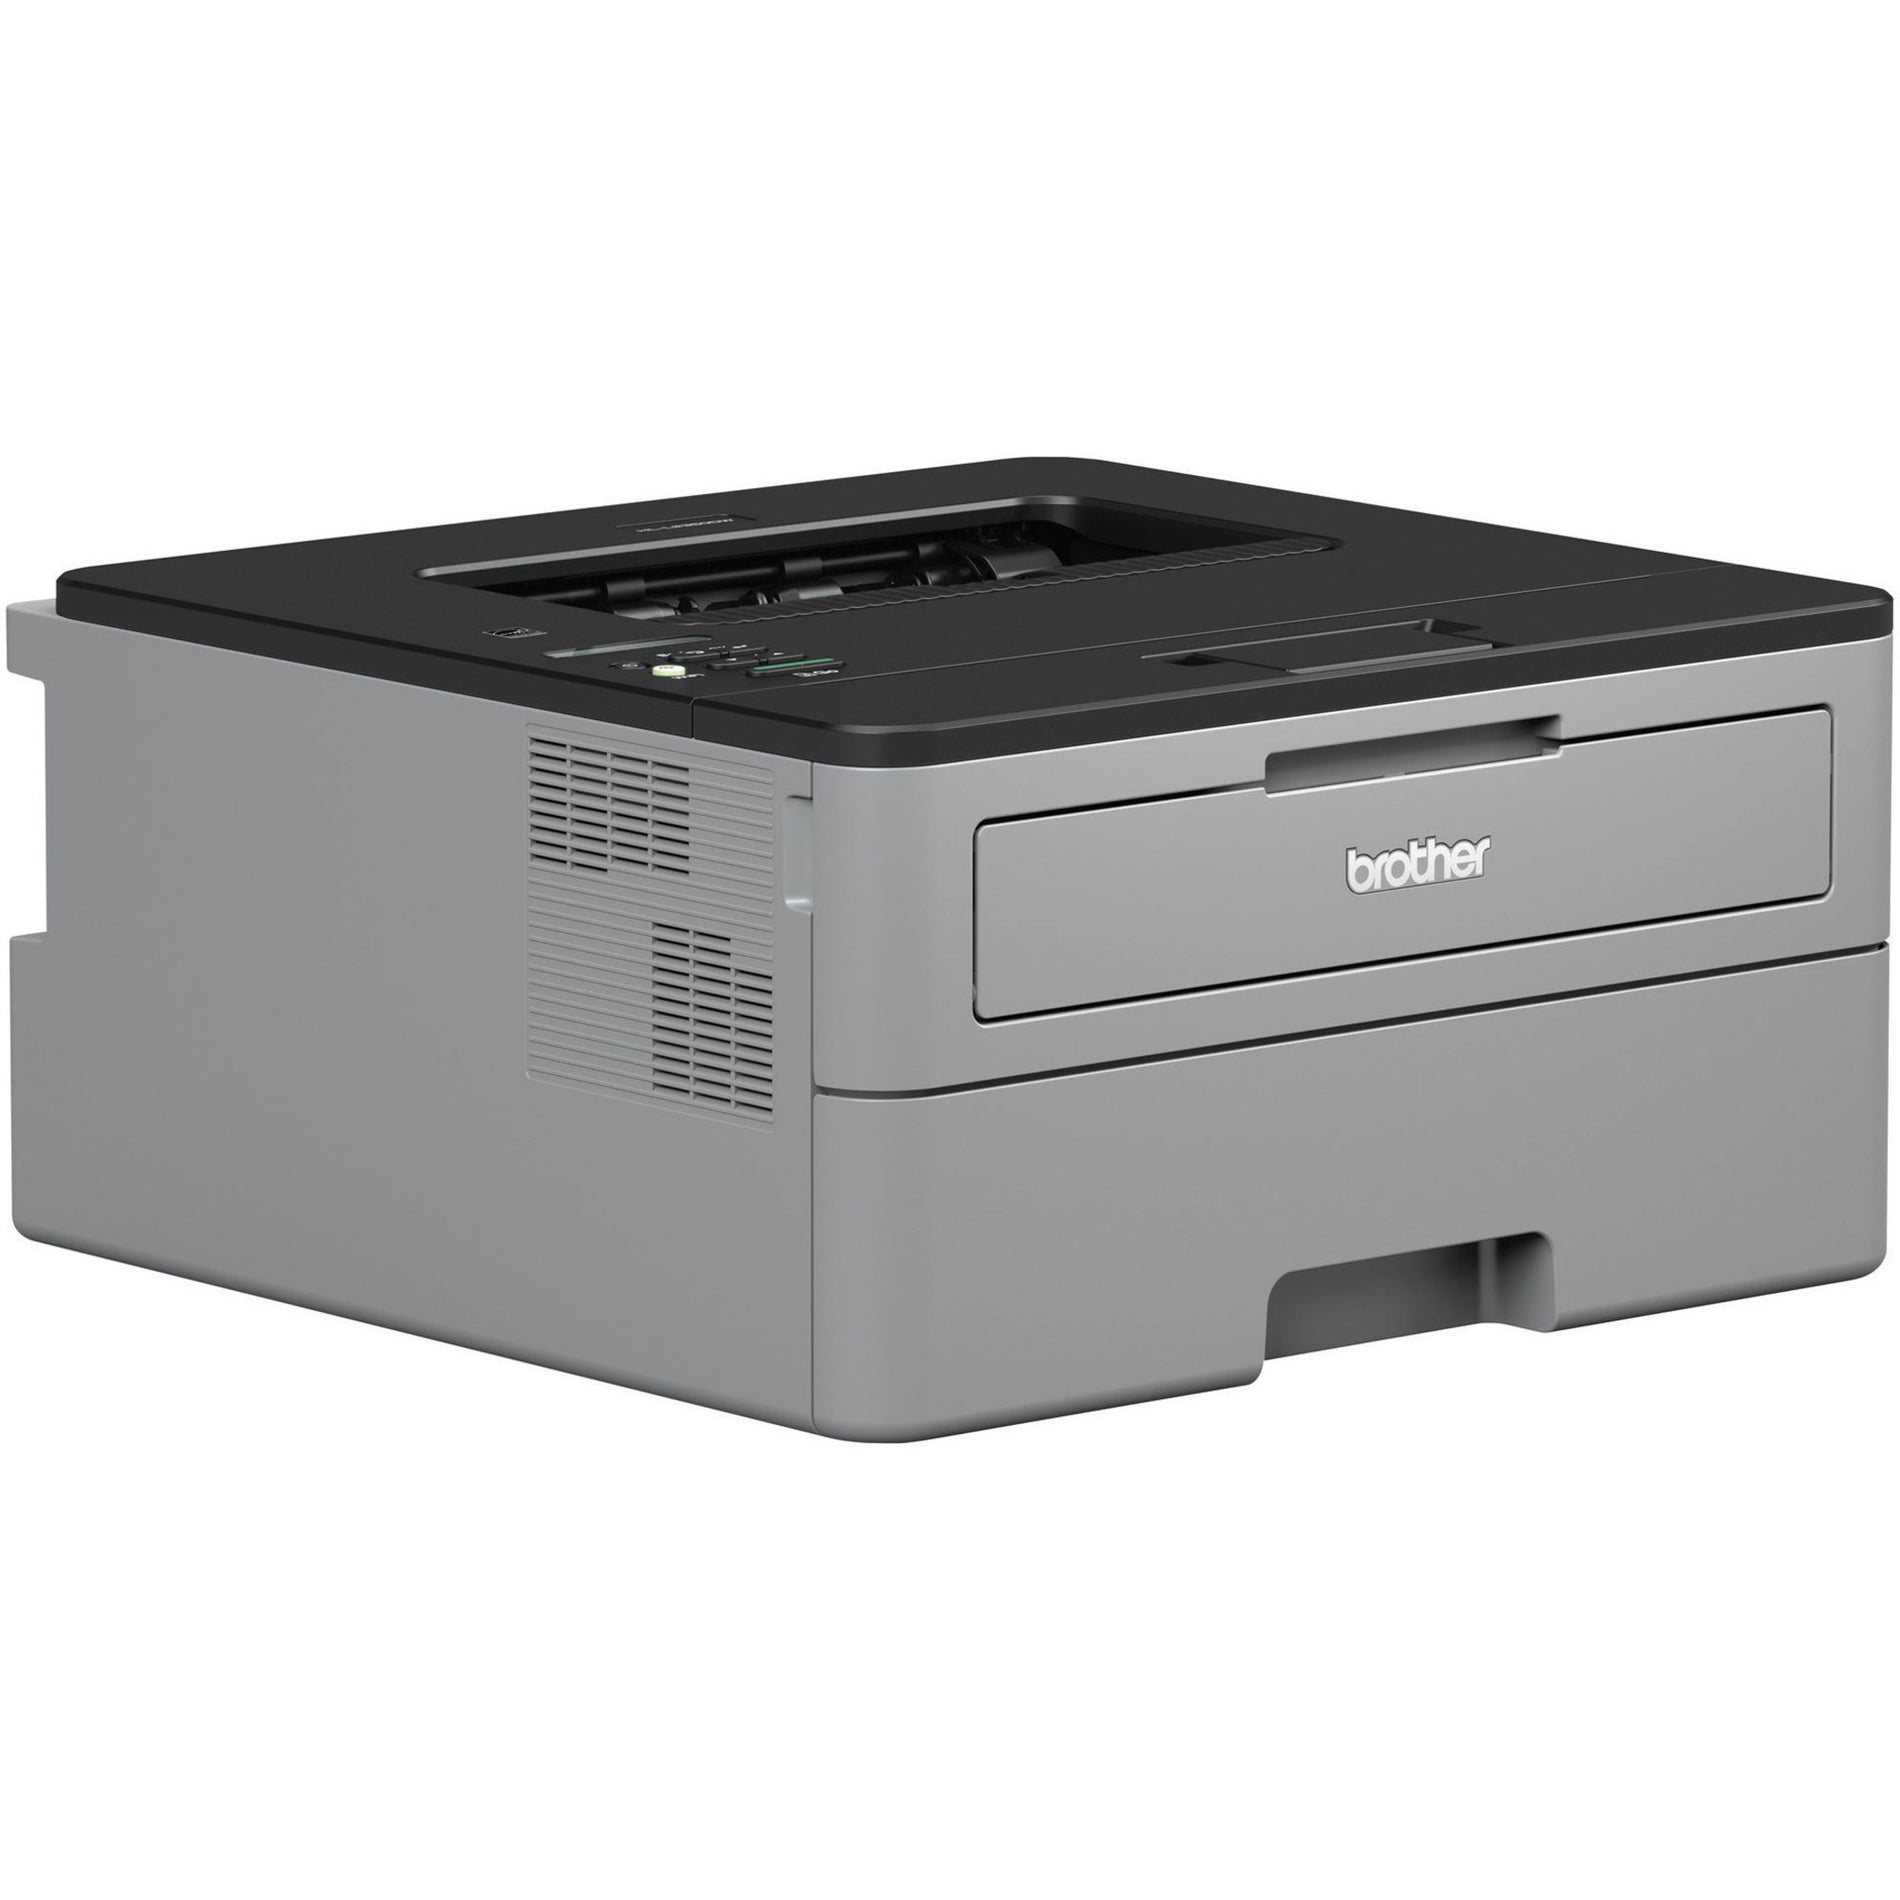 Brother HL-L2350DW Monochrome Laser Printer, Wireless, 36 ppm, Black